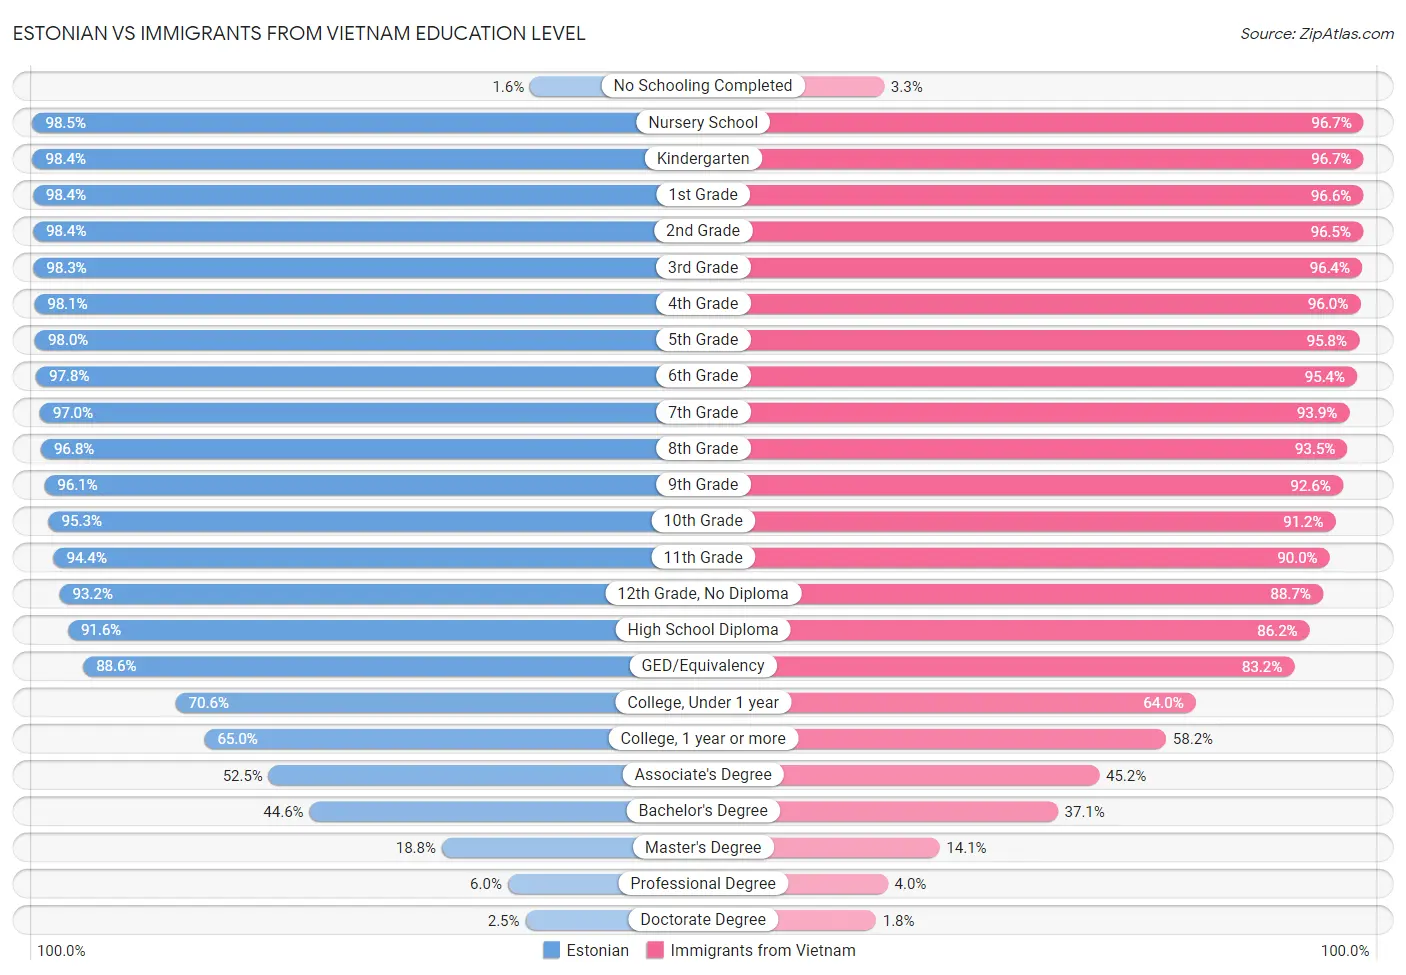 Estonian vs Immigrants from Vietnam Education Level